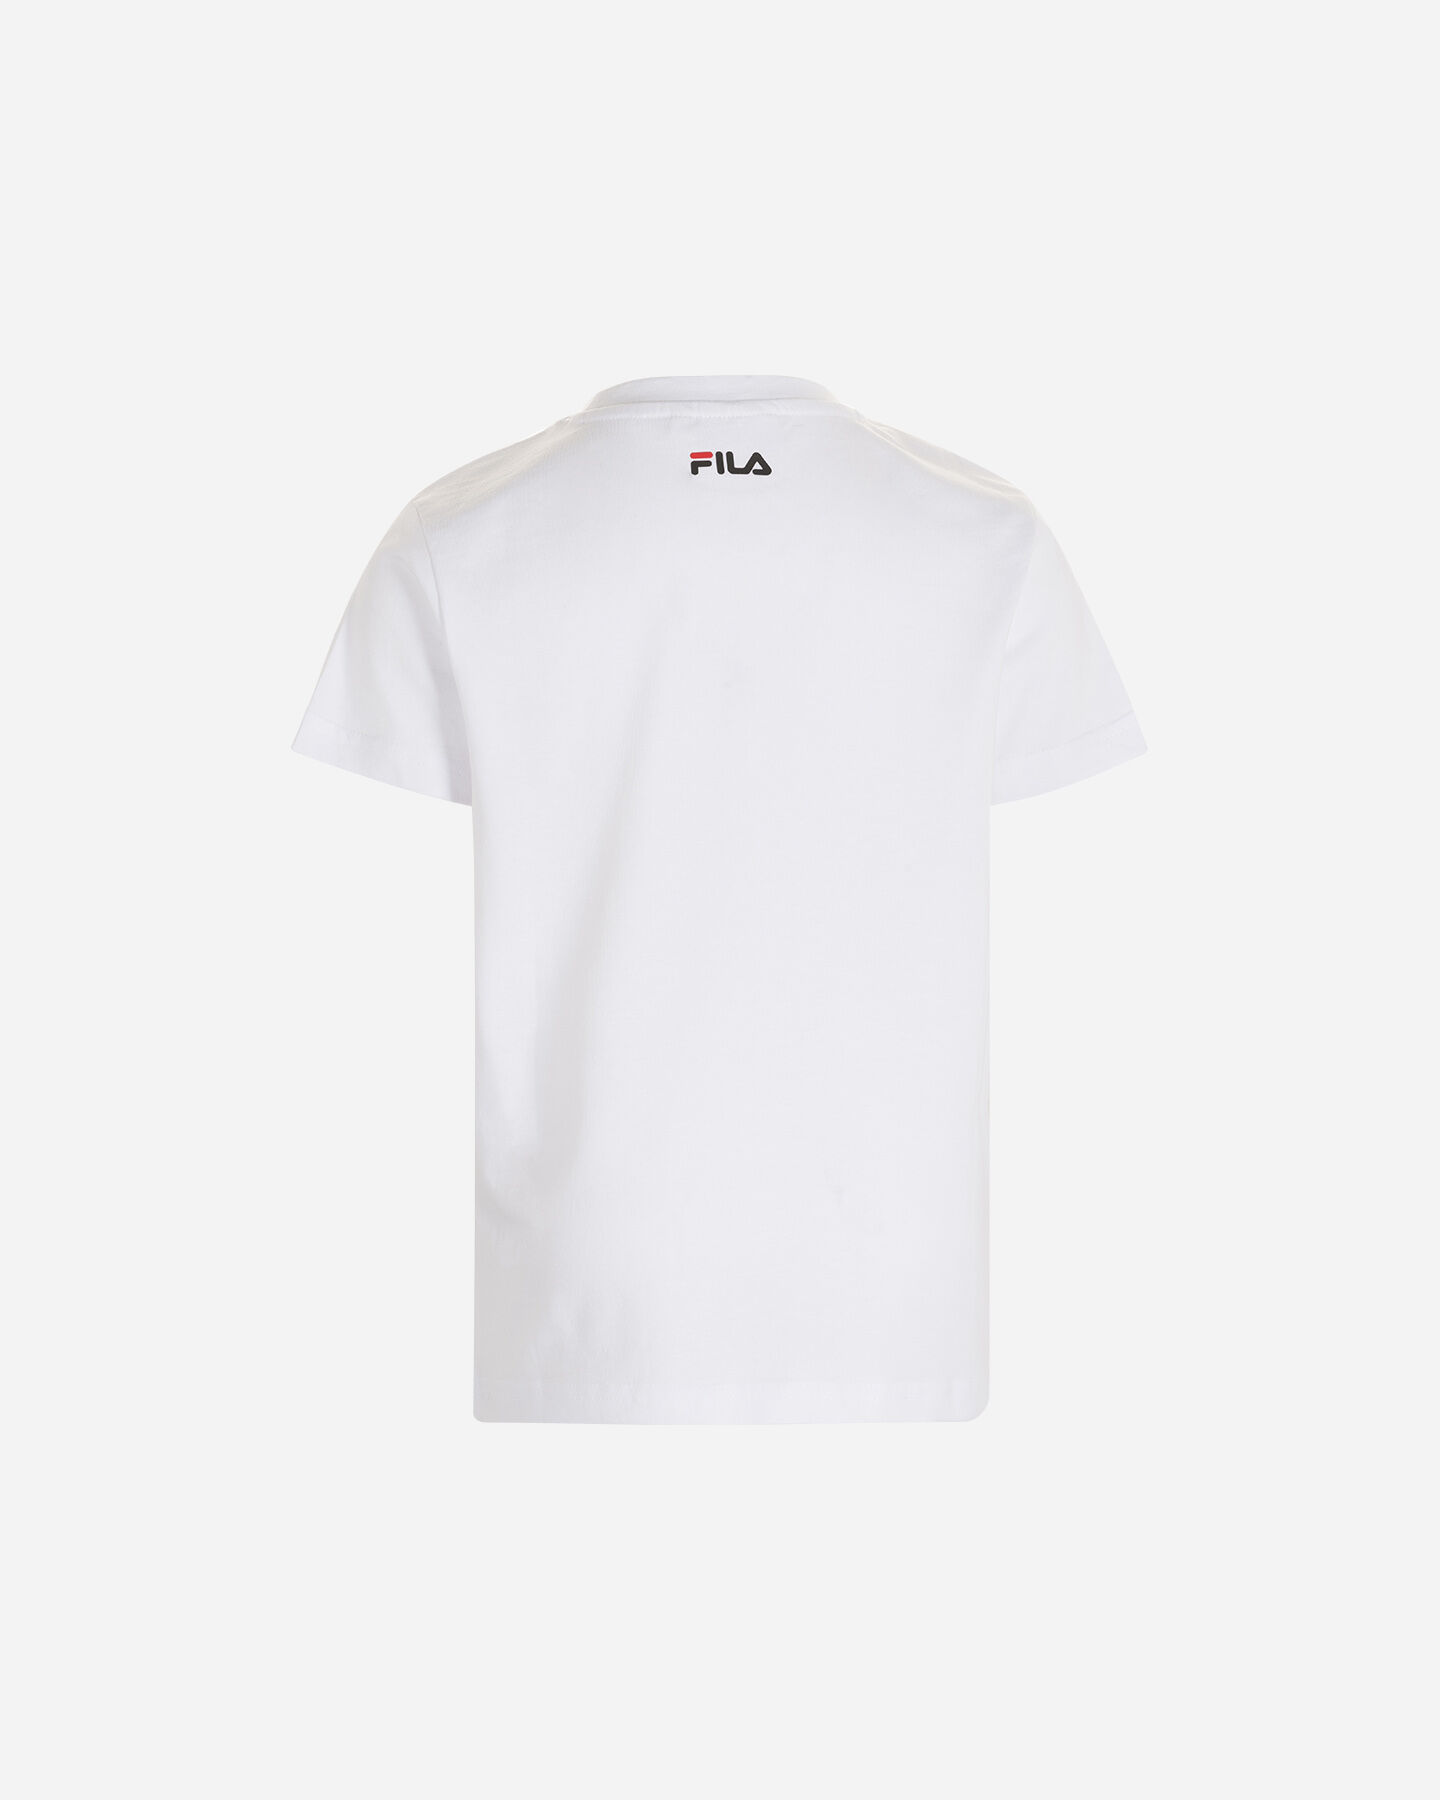  T-Shirt FILA STREETWEAR LOGO JR S4107158 scatto 1